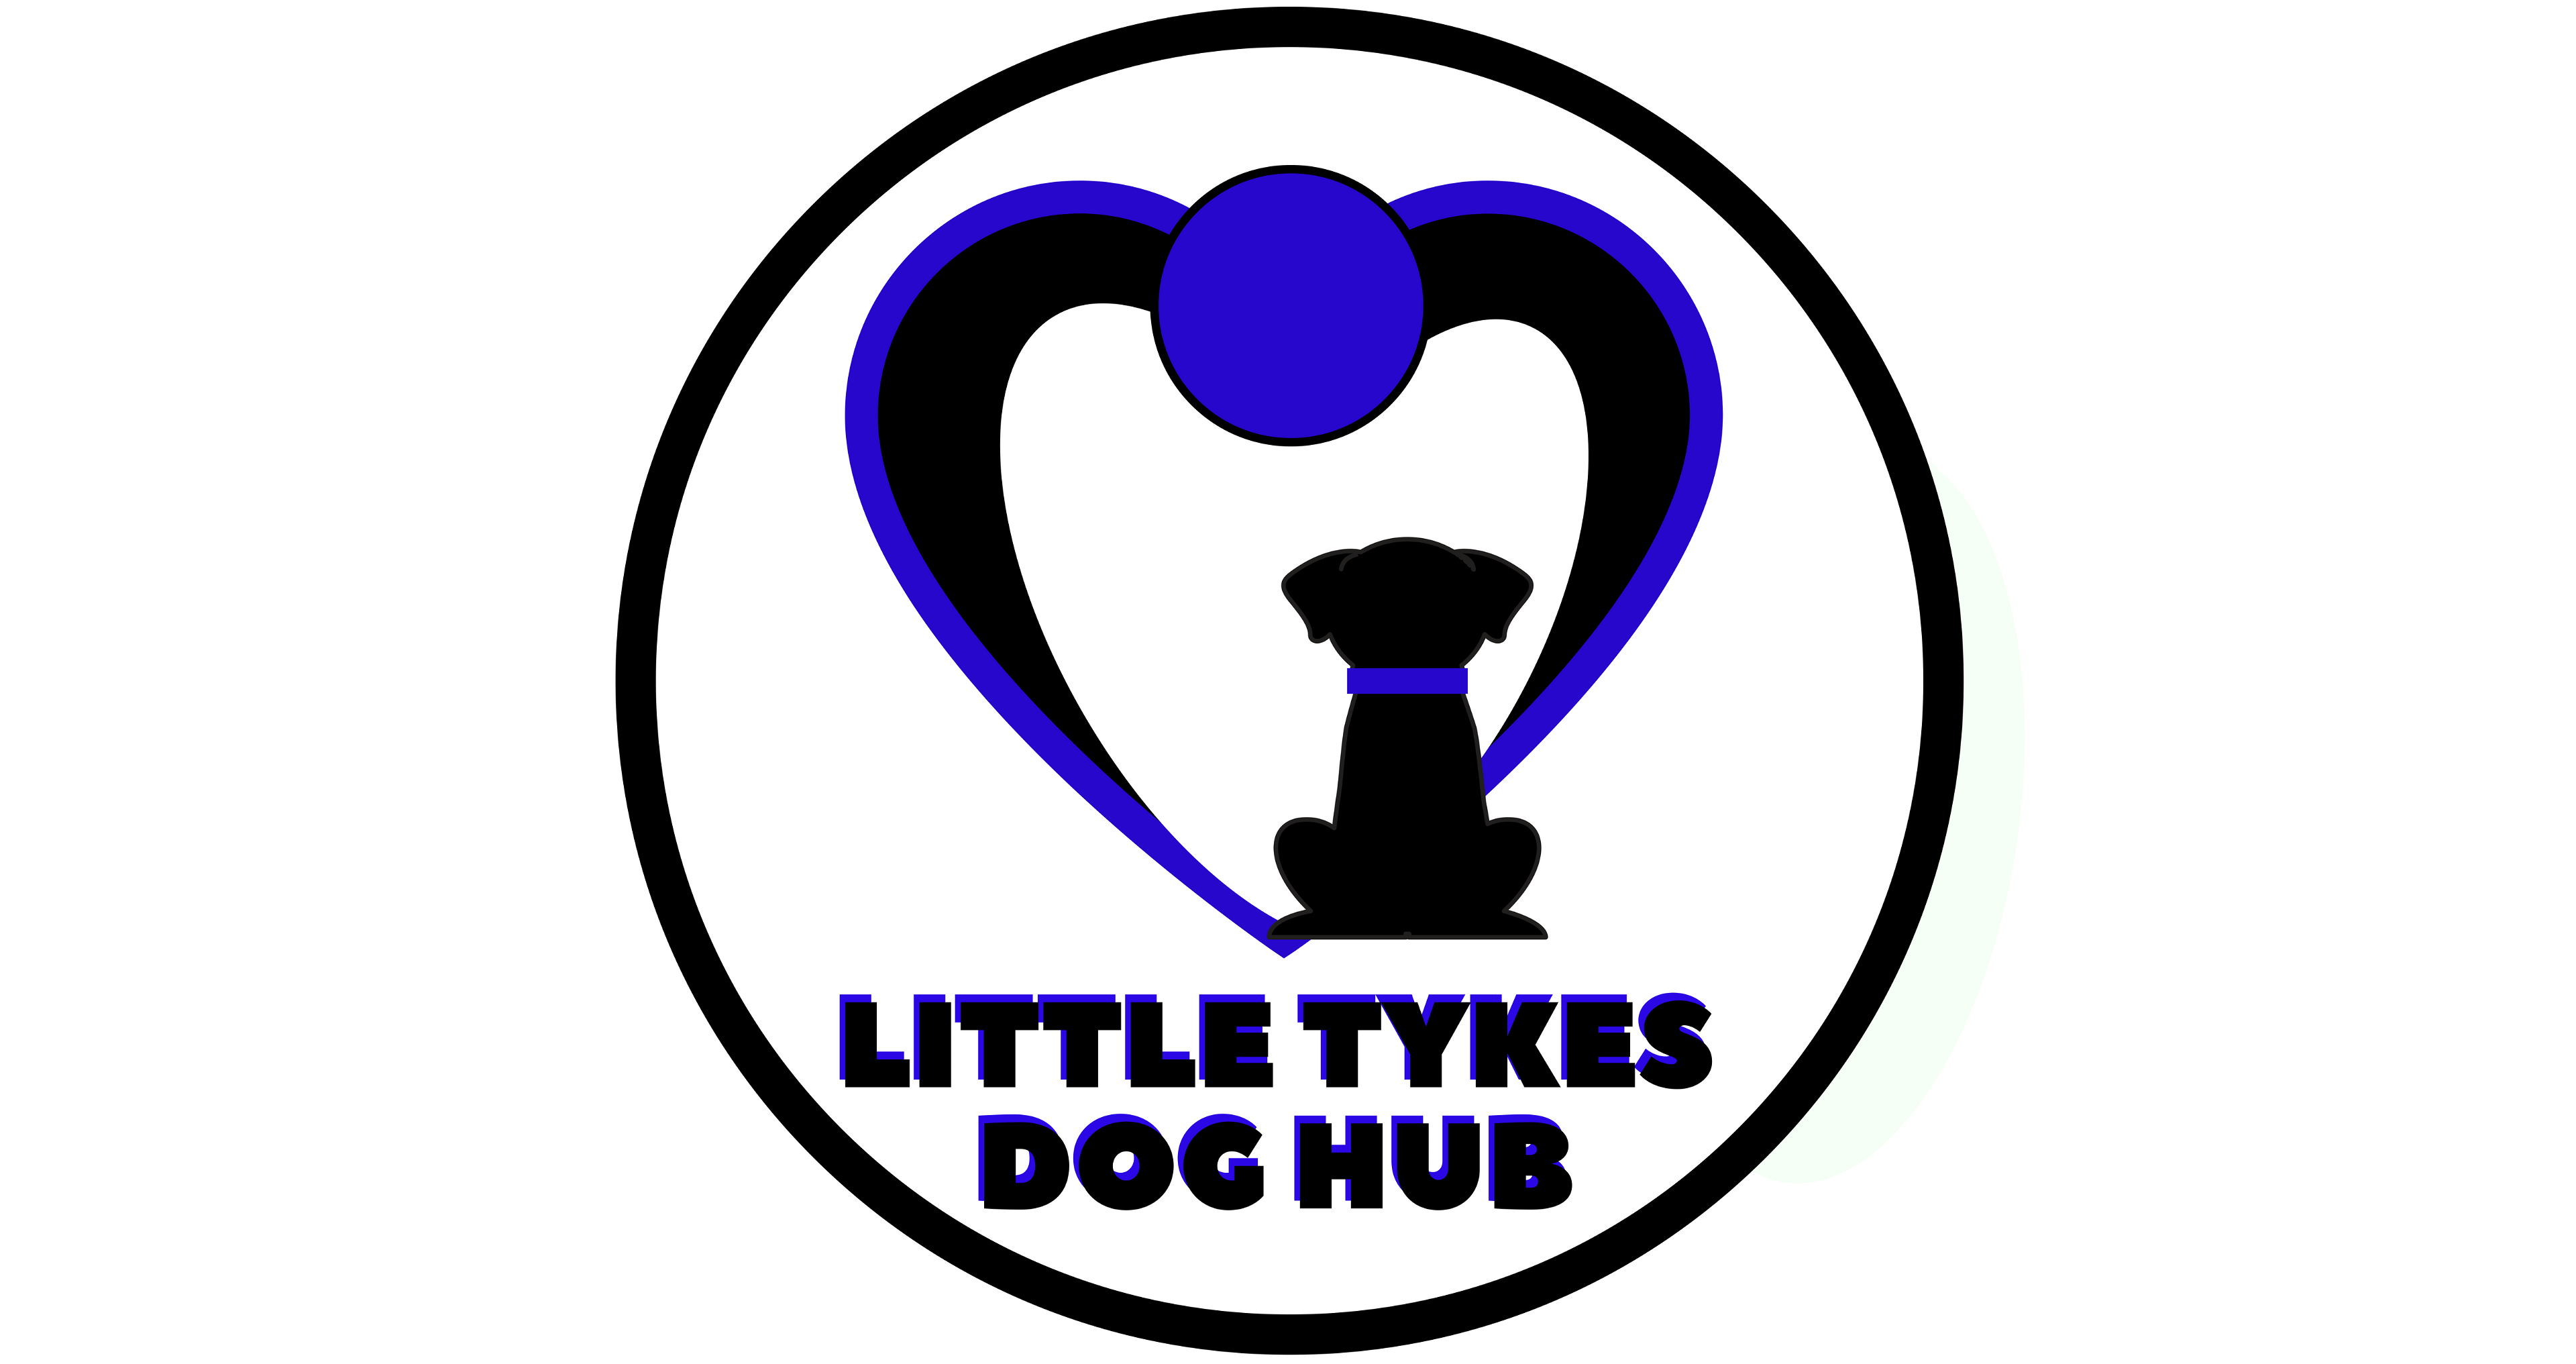 Little Tykes Dog Hub Ltd logo